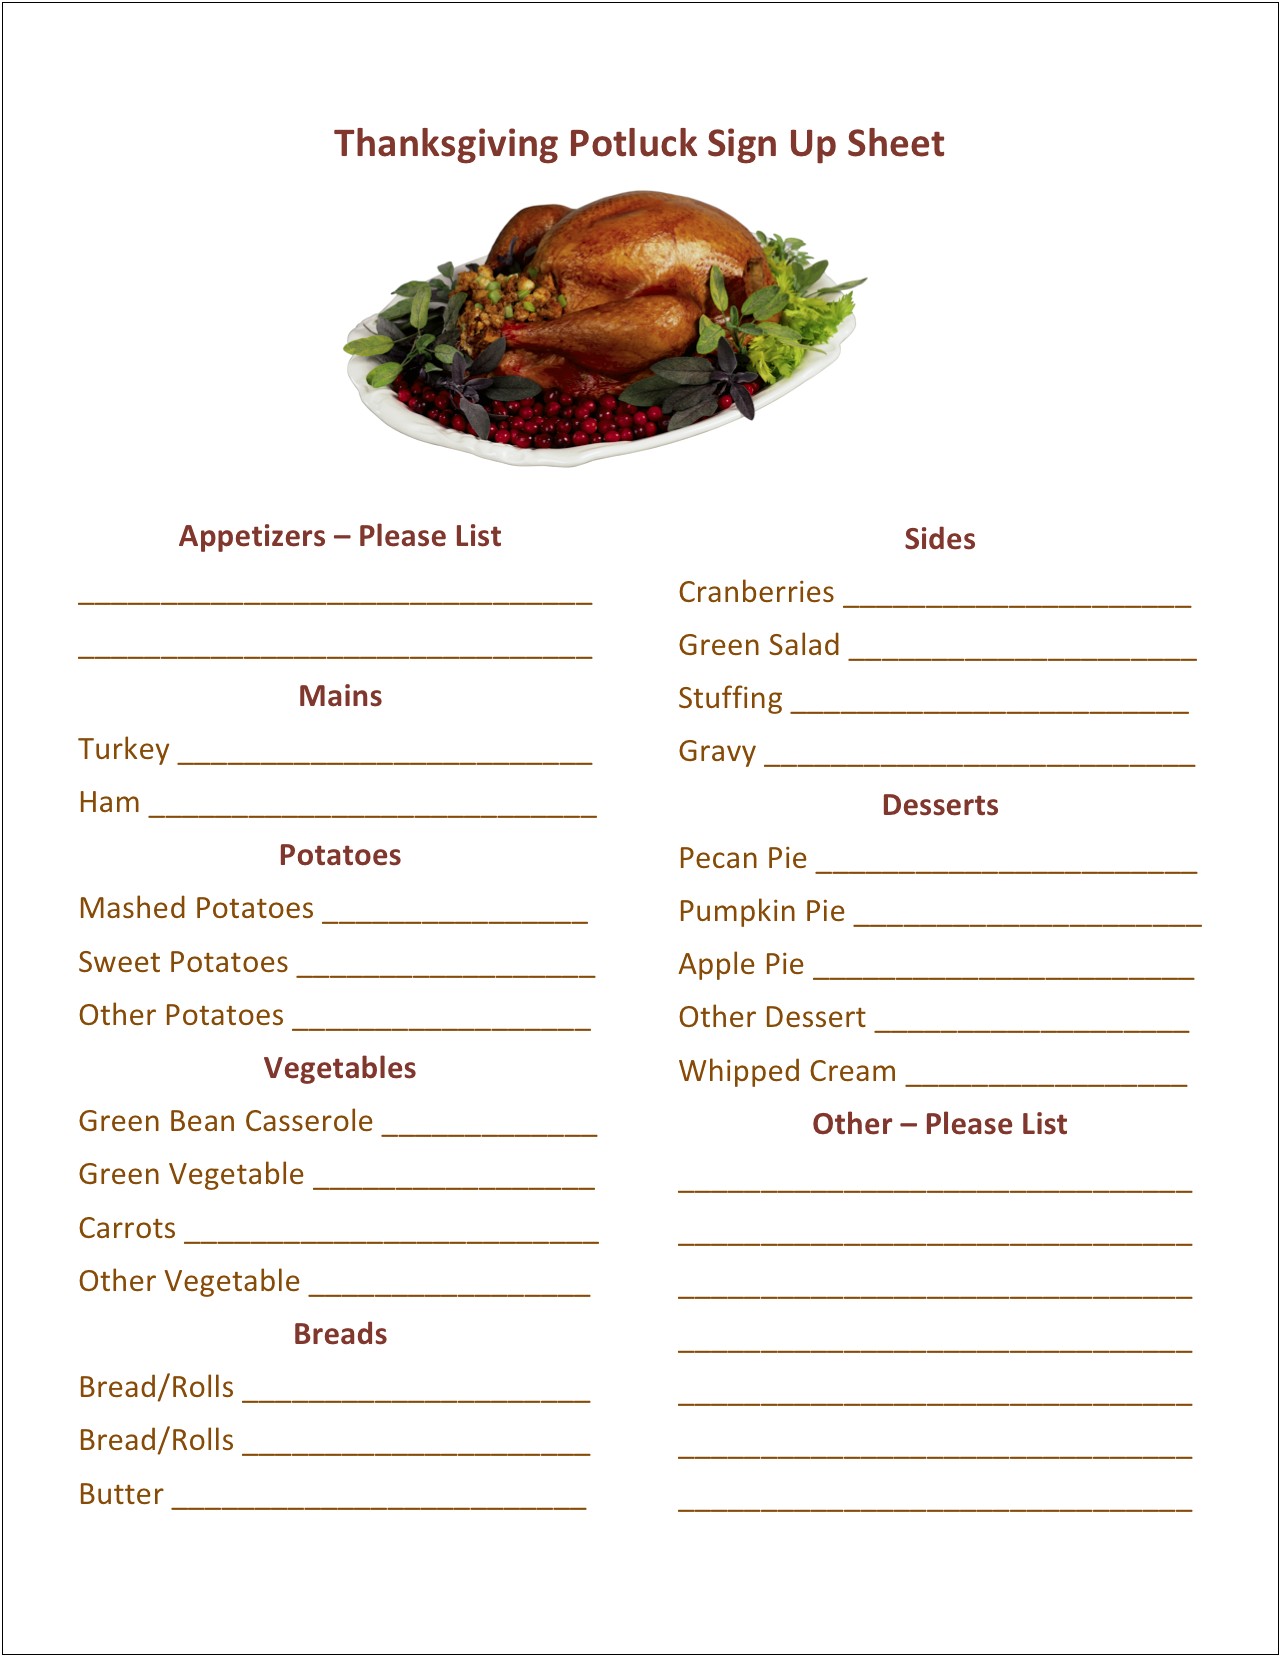 free-printable-potluck-sign-up-sheet-template-christmas-templates-resume-designs-qagpdn2wgm